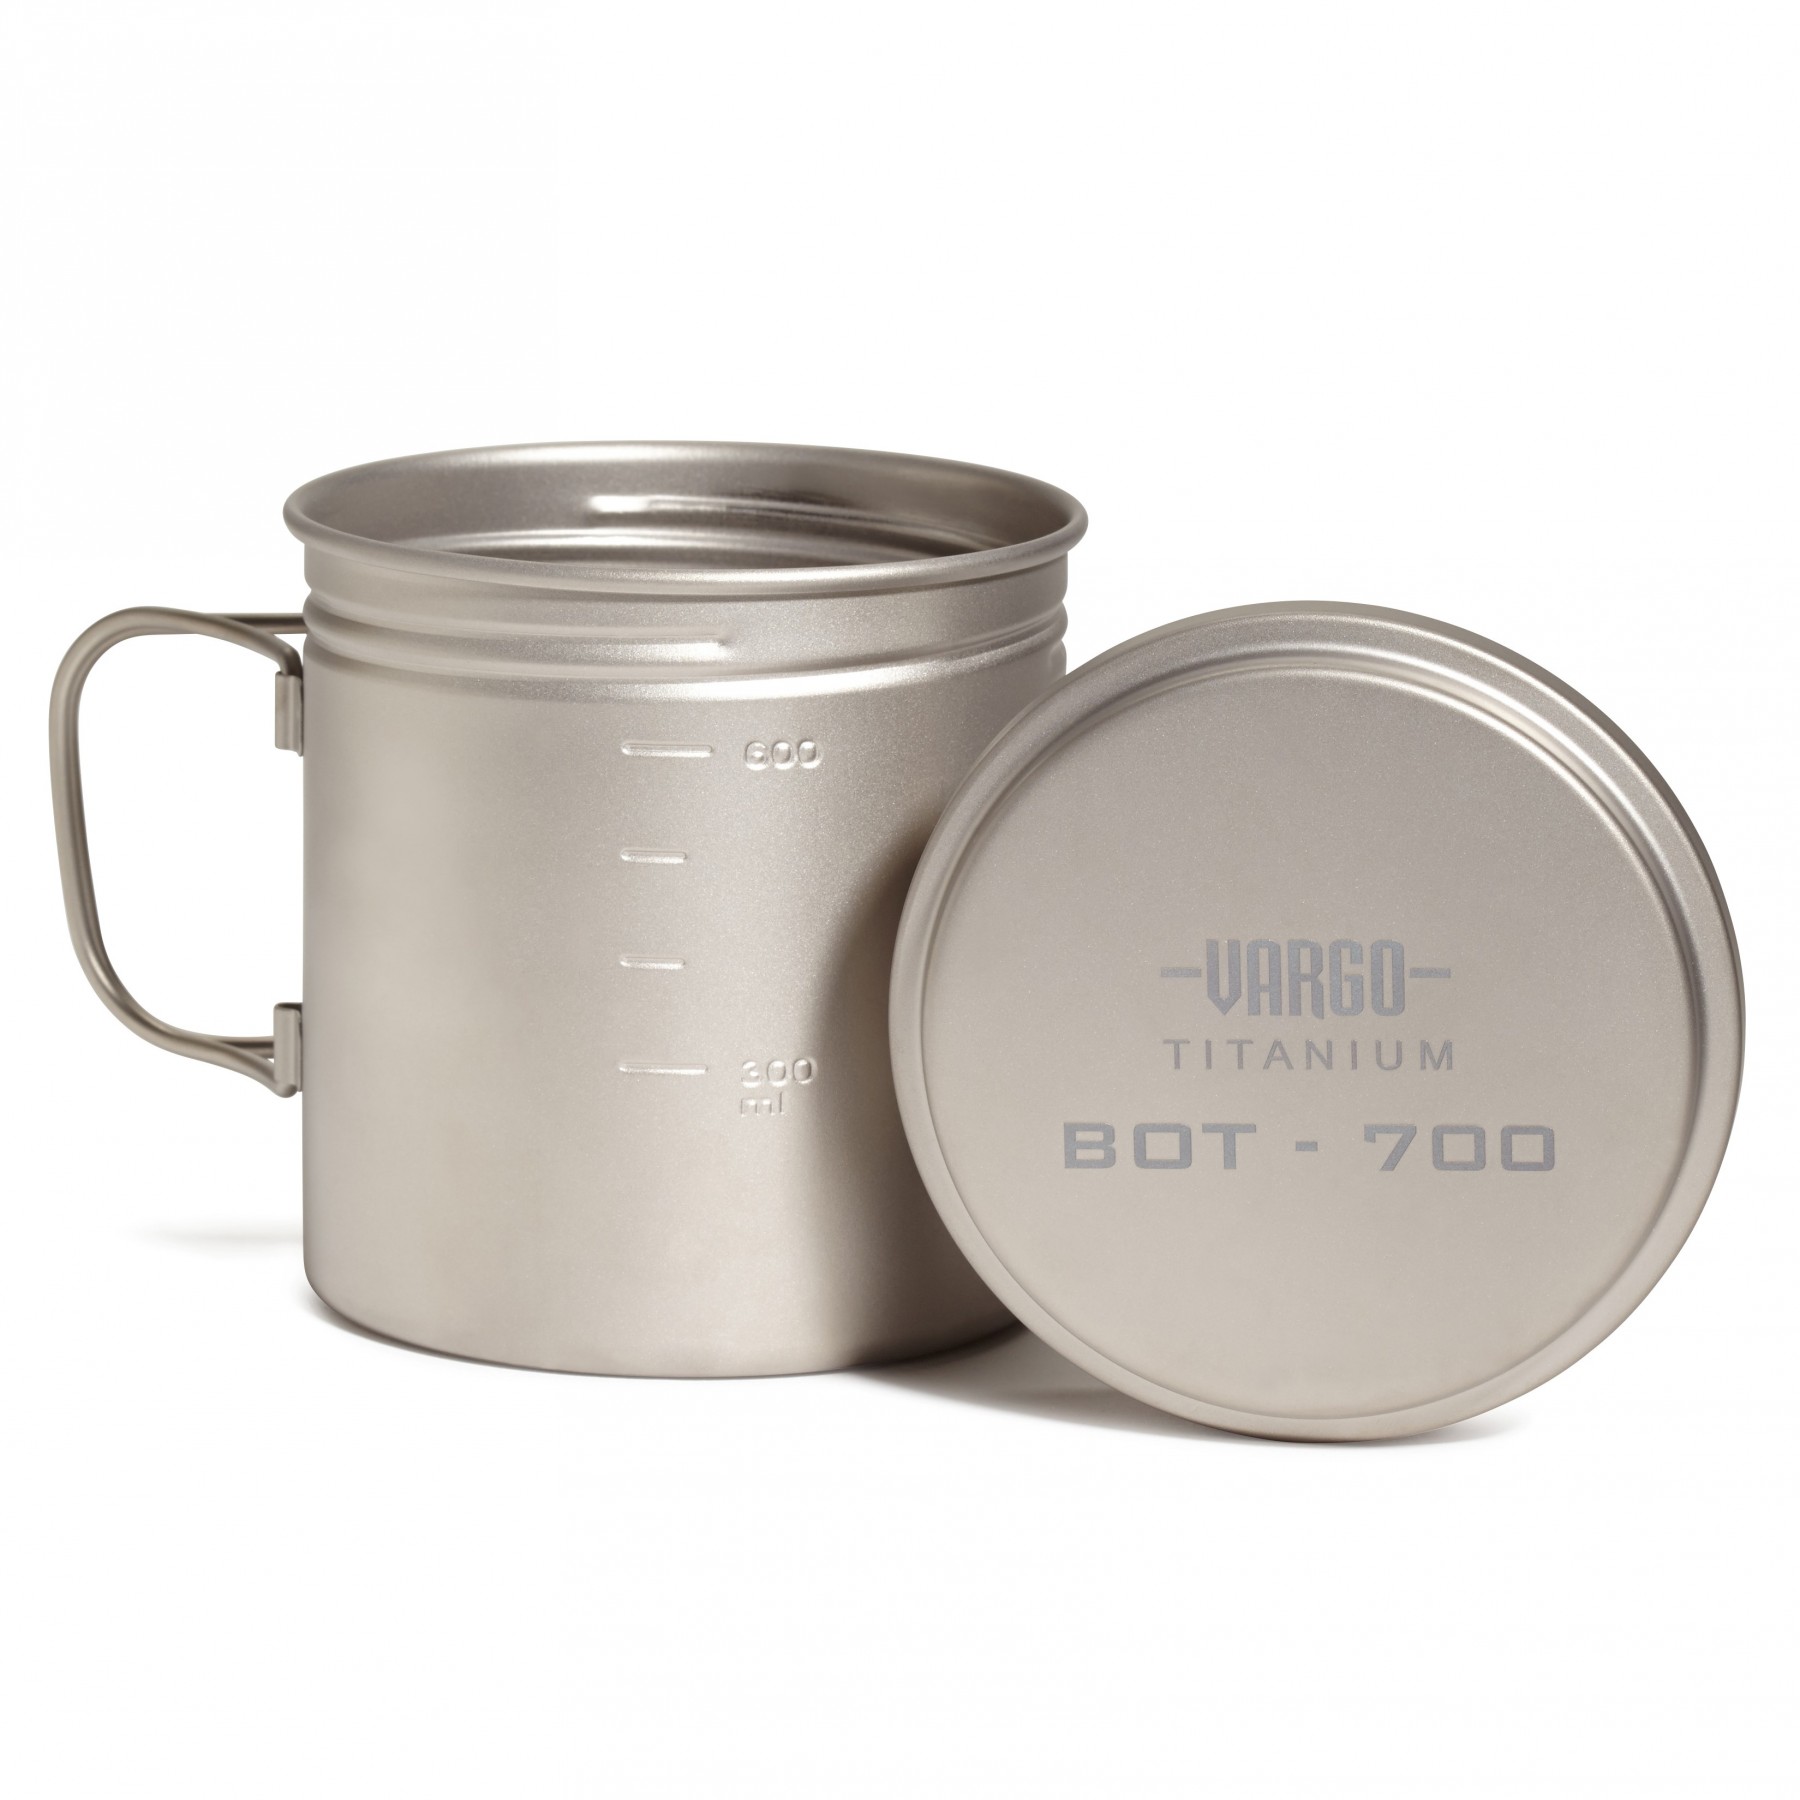 Vargo Titanium BOT Cooking Mug - 700 ml - Click Image to Close